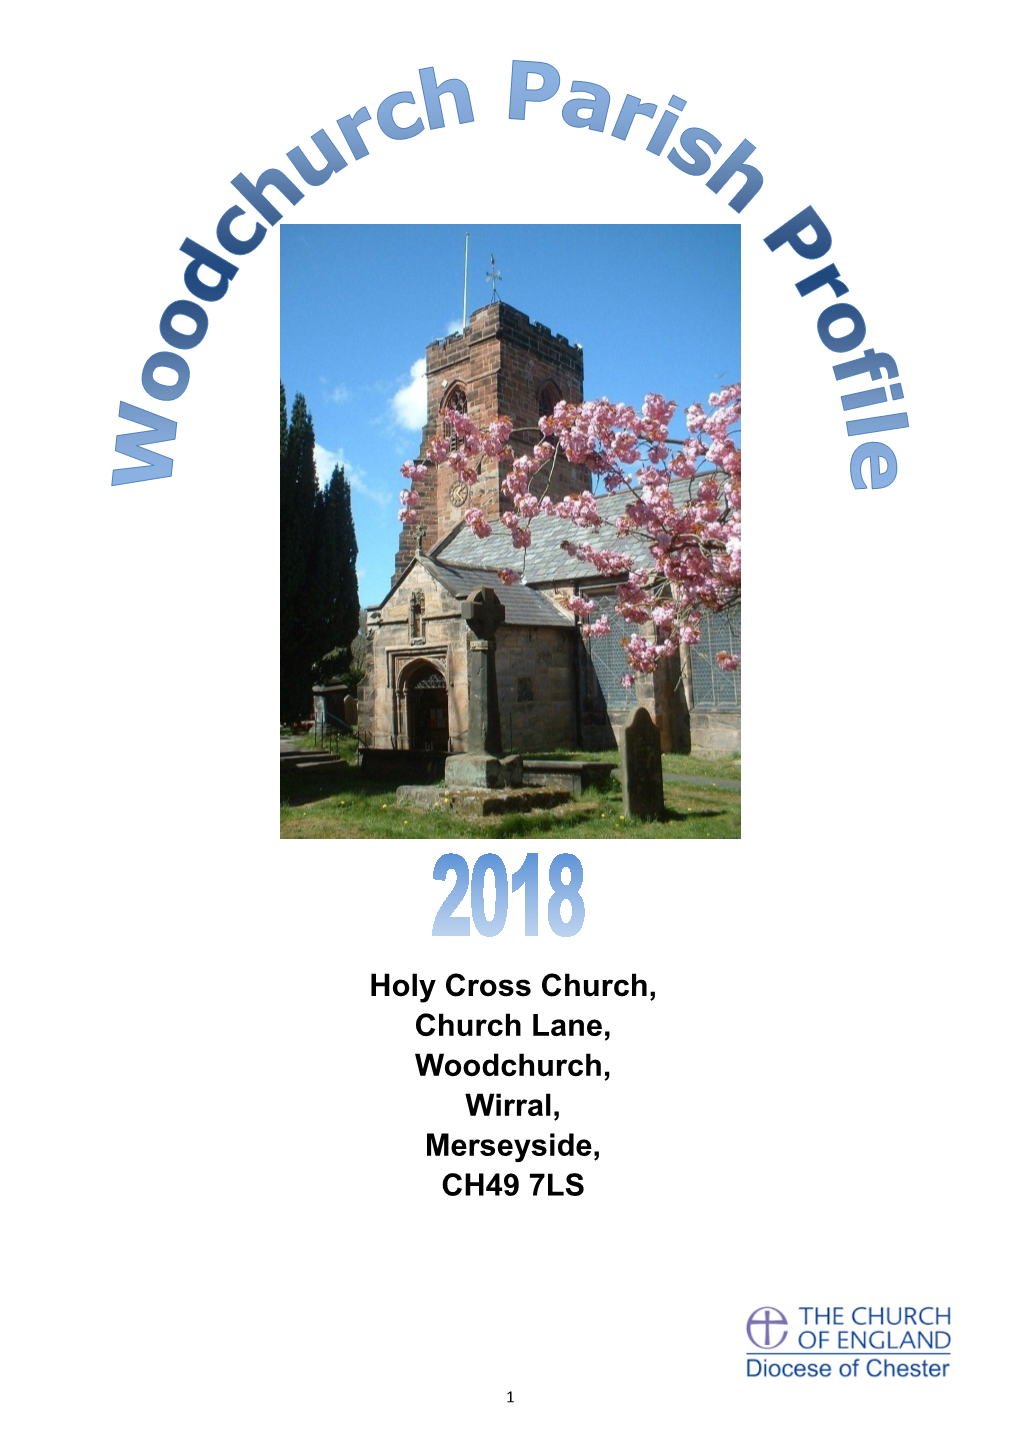 Holy Cross Church, Church Lane, Woodchurch, Wirral, Merseyside, CH49 7LS